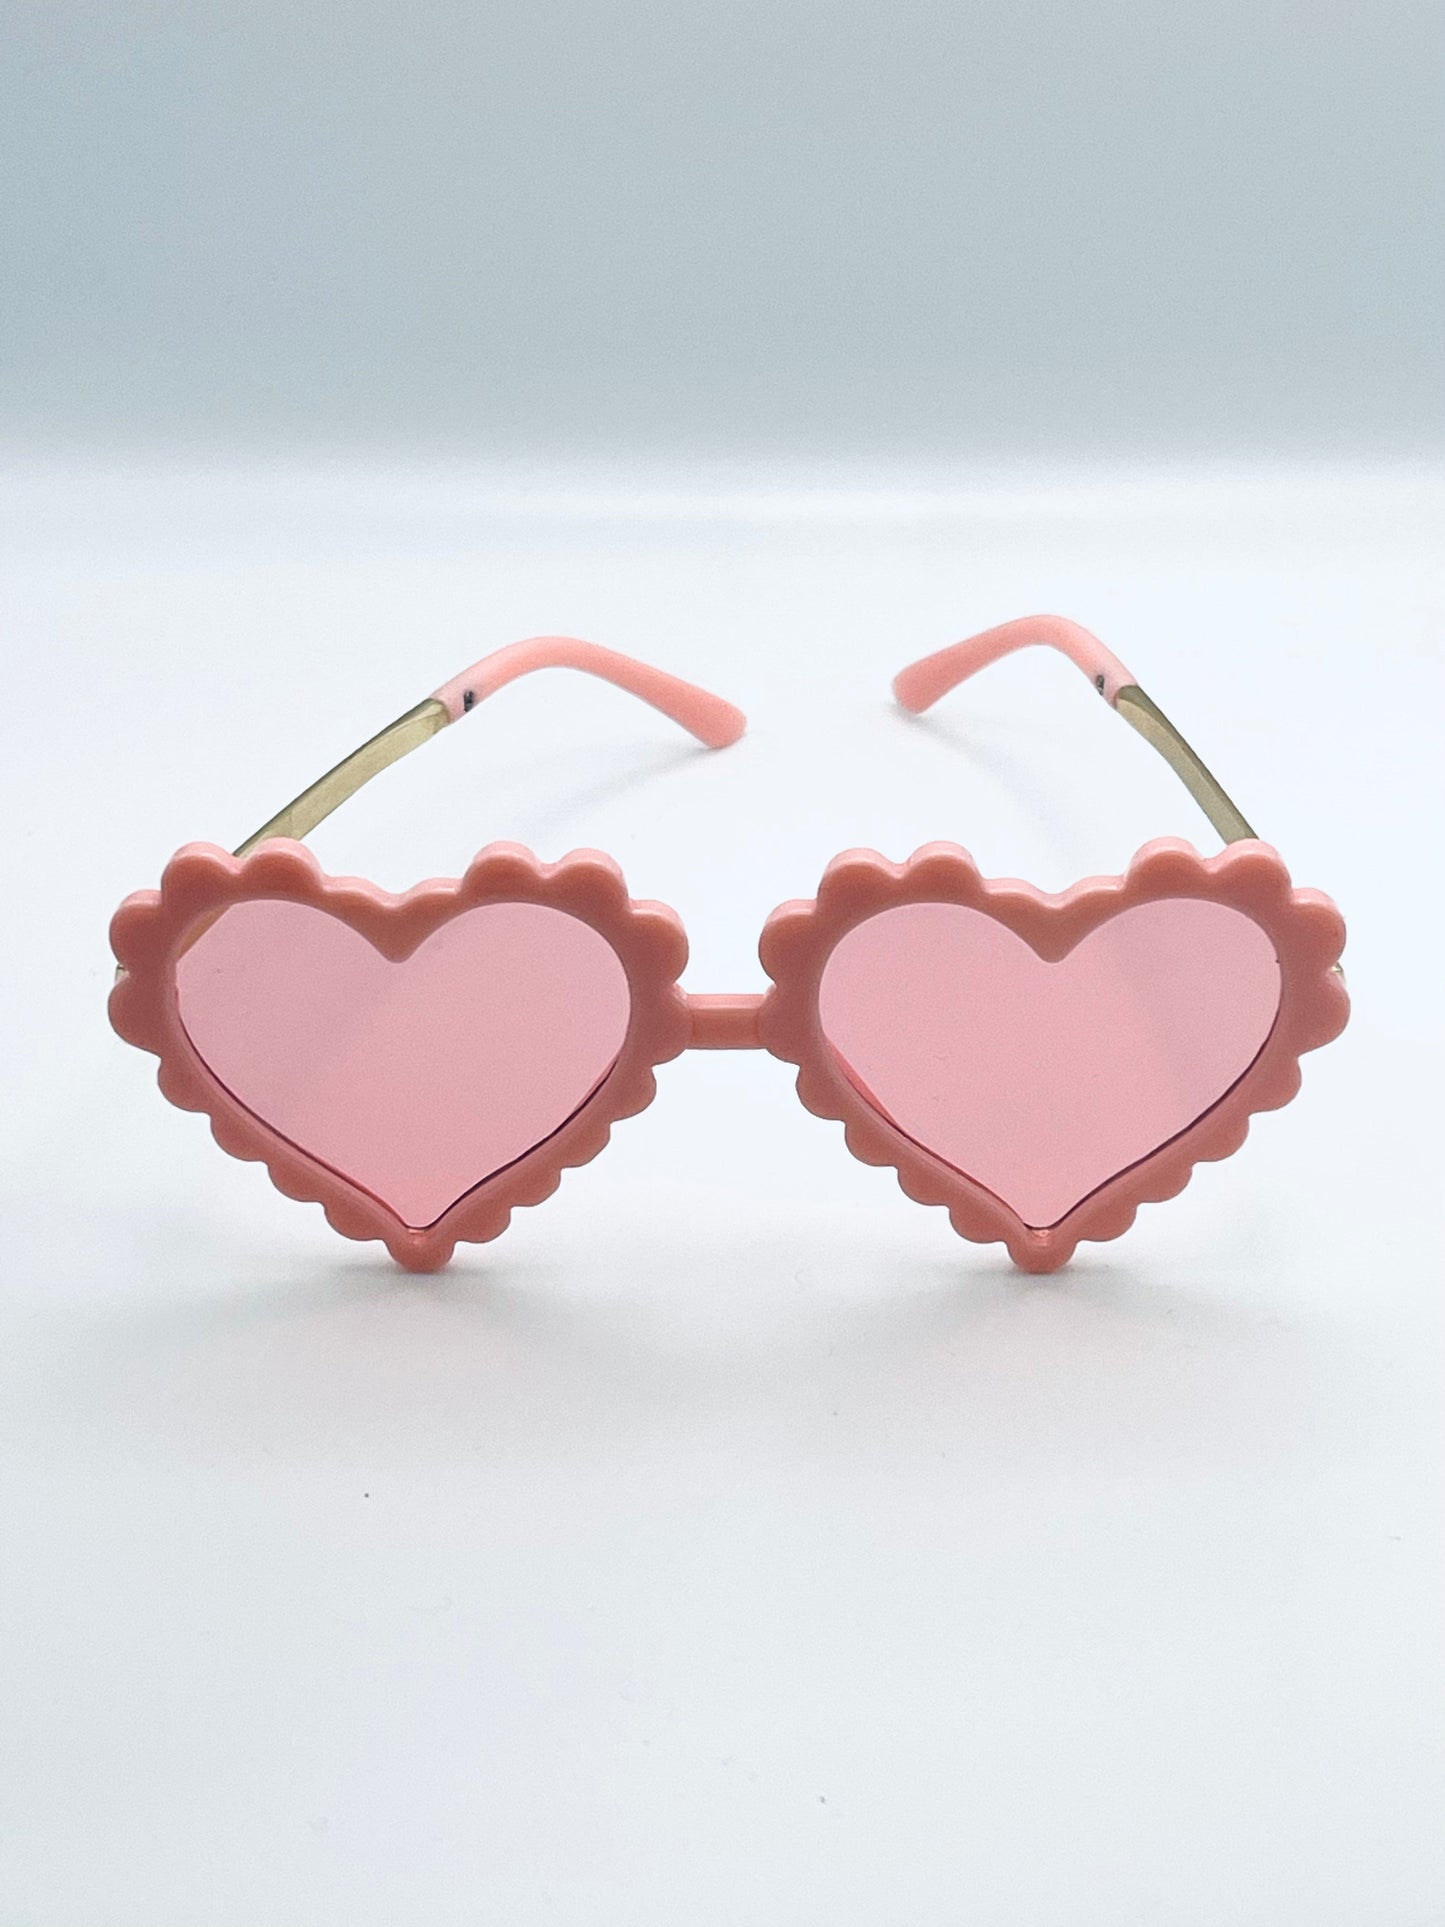 Fashionably, BBK! Accessories Girls Pink Heart Shaped Sunglasses